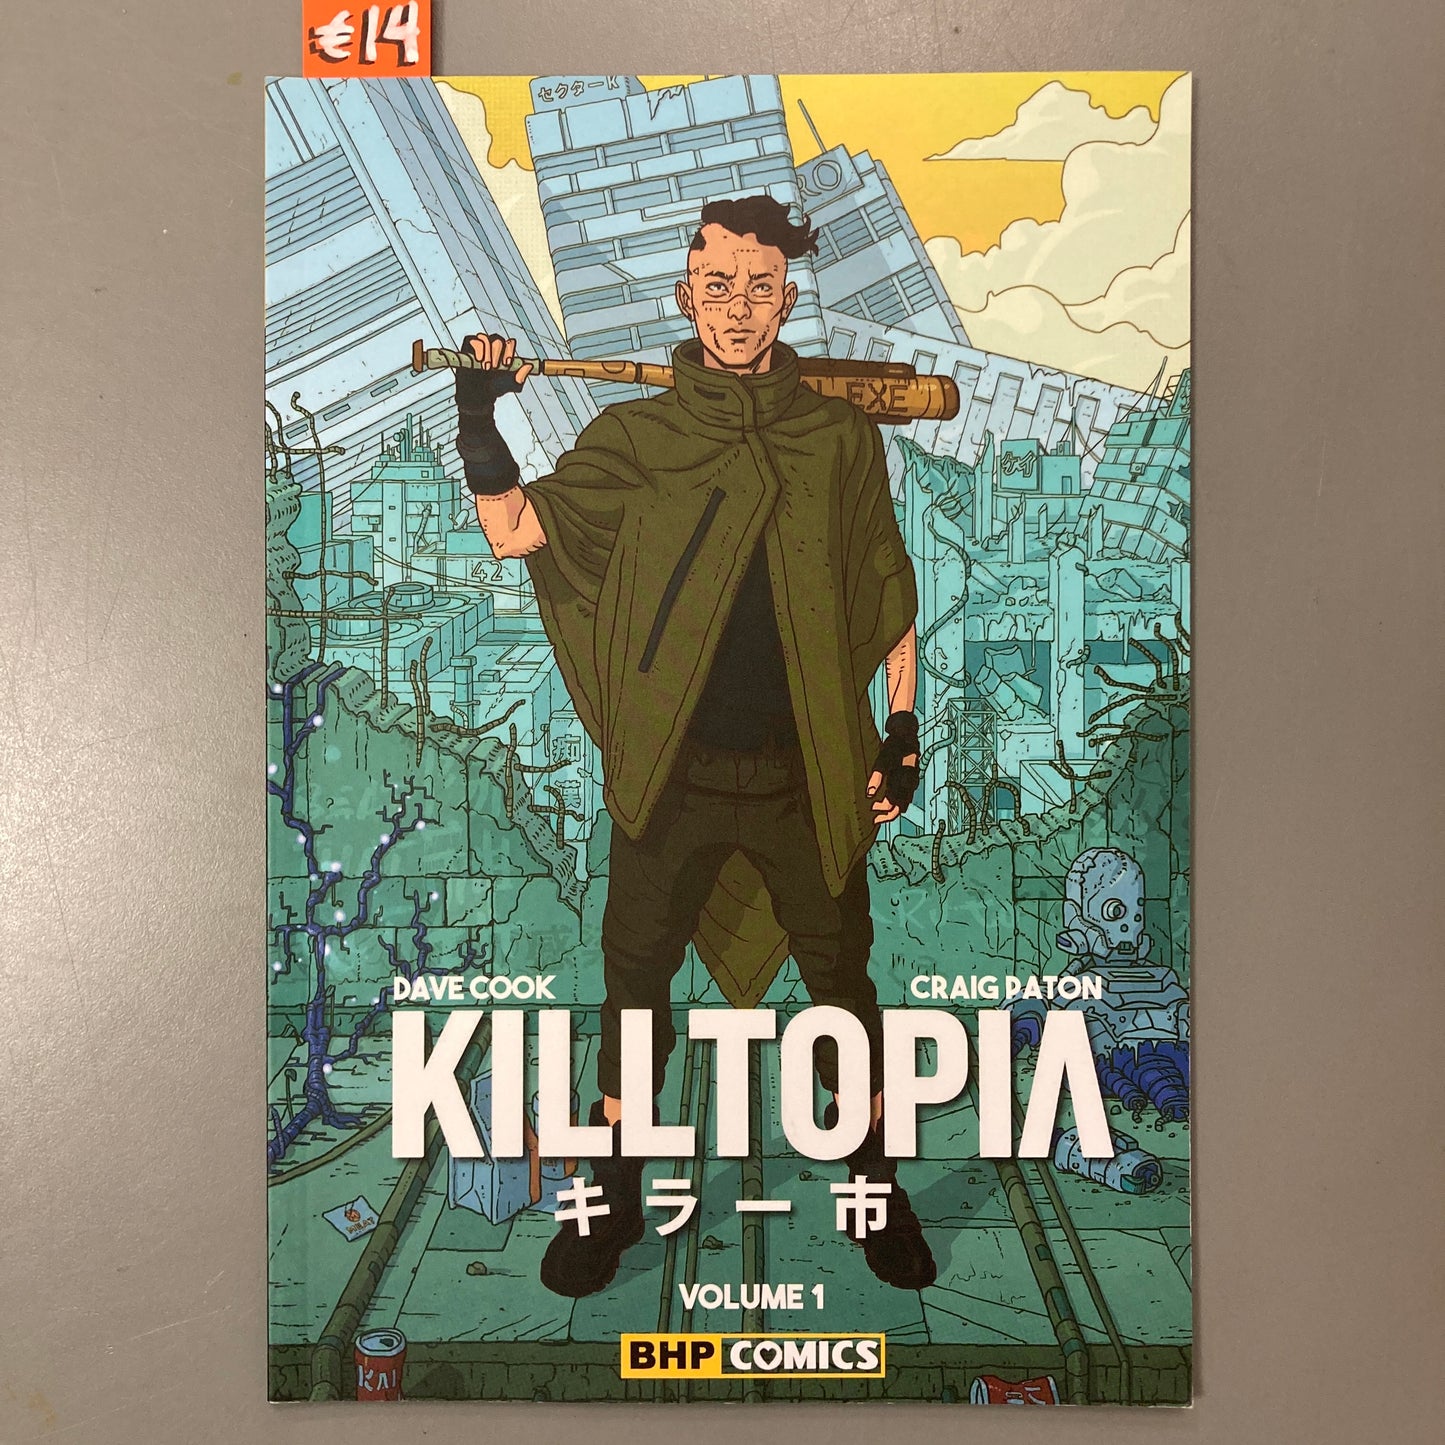 Killtopia, Volume 1